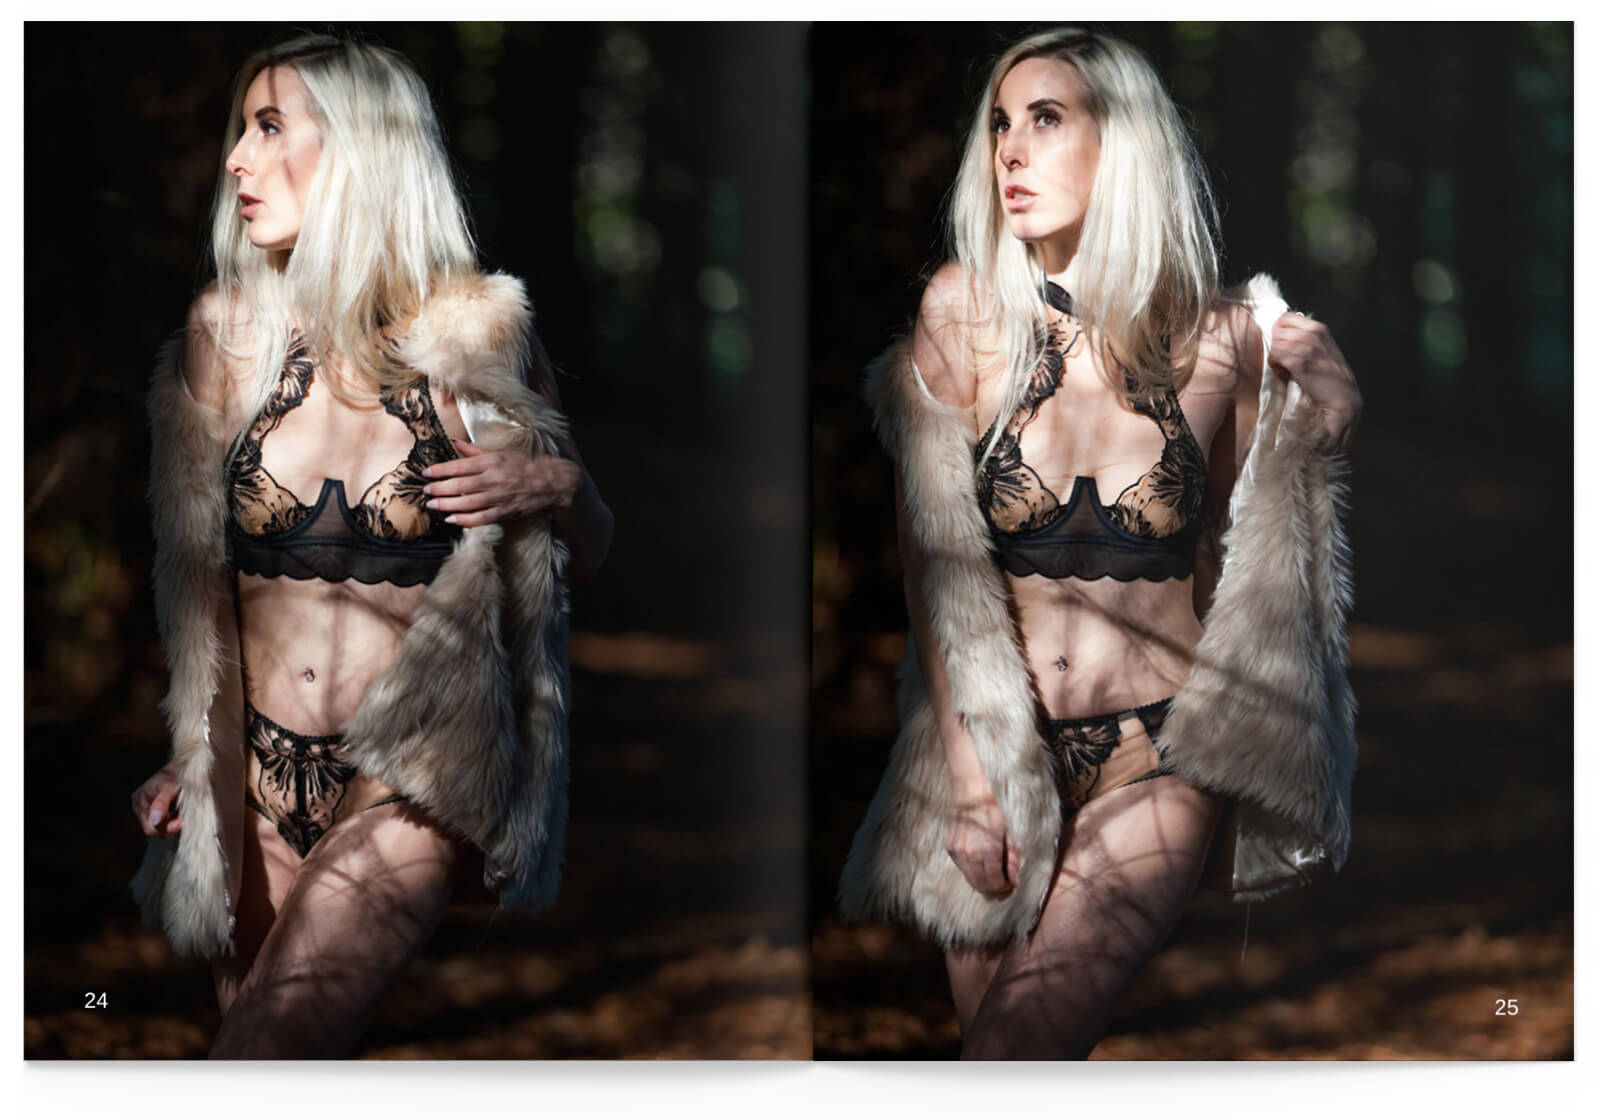 Dark Forest Editorial • Darkest Fox Vixen Lingerie Model Julie Matthews